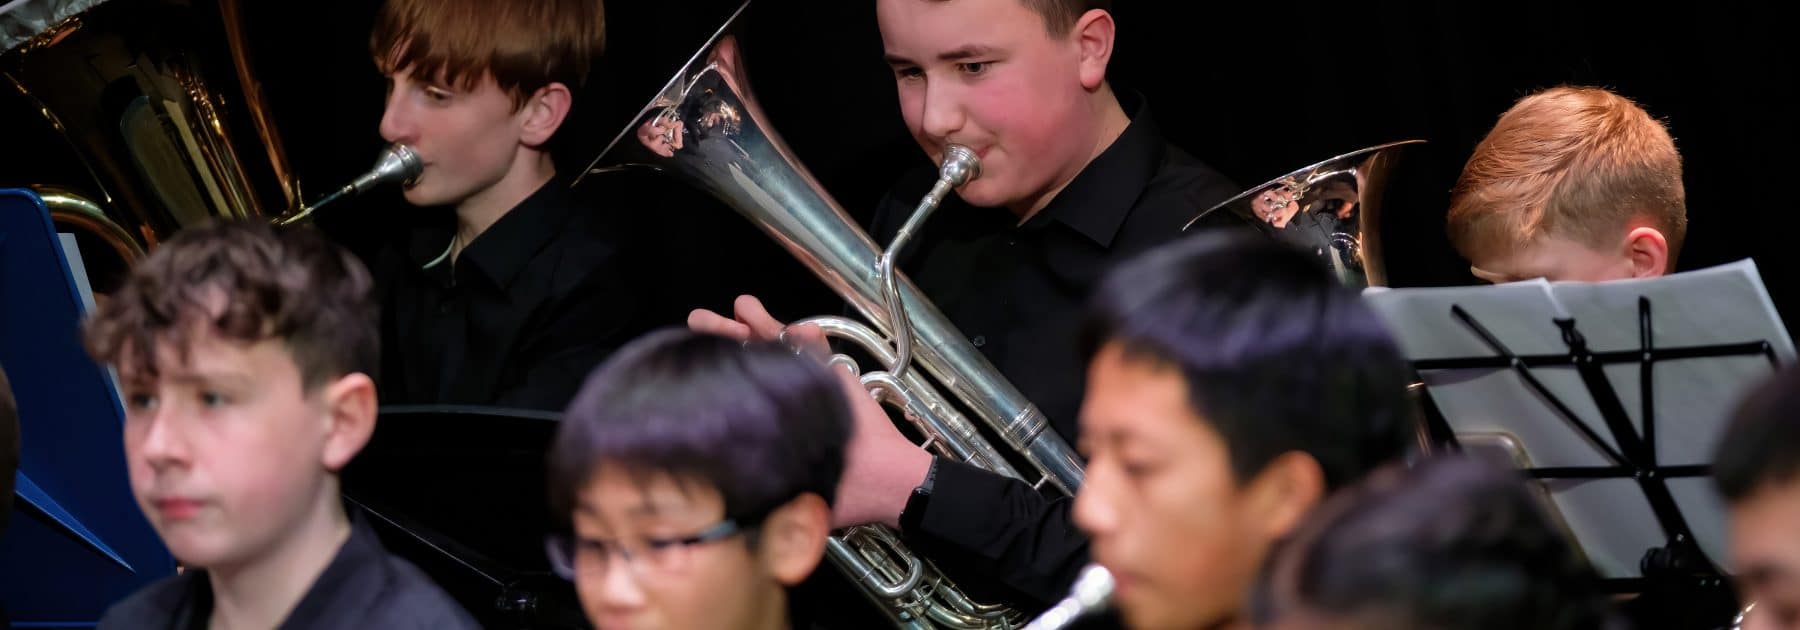 Brass Ensemble Supports Local Festivities